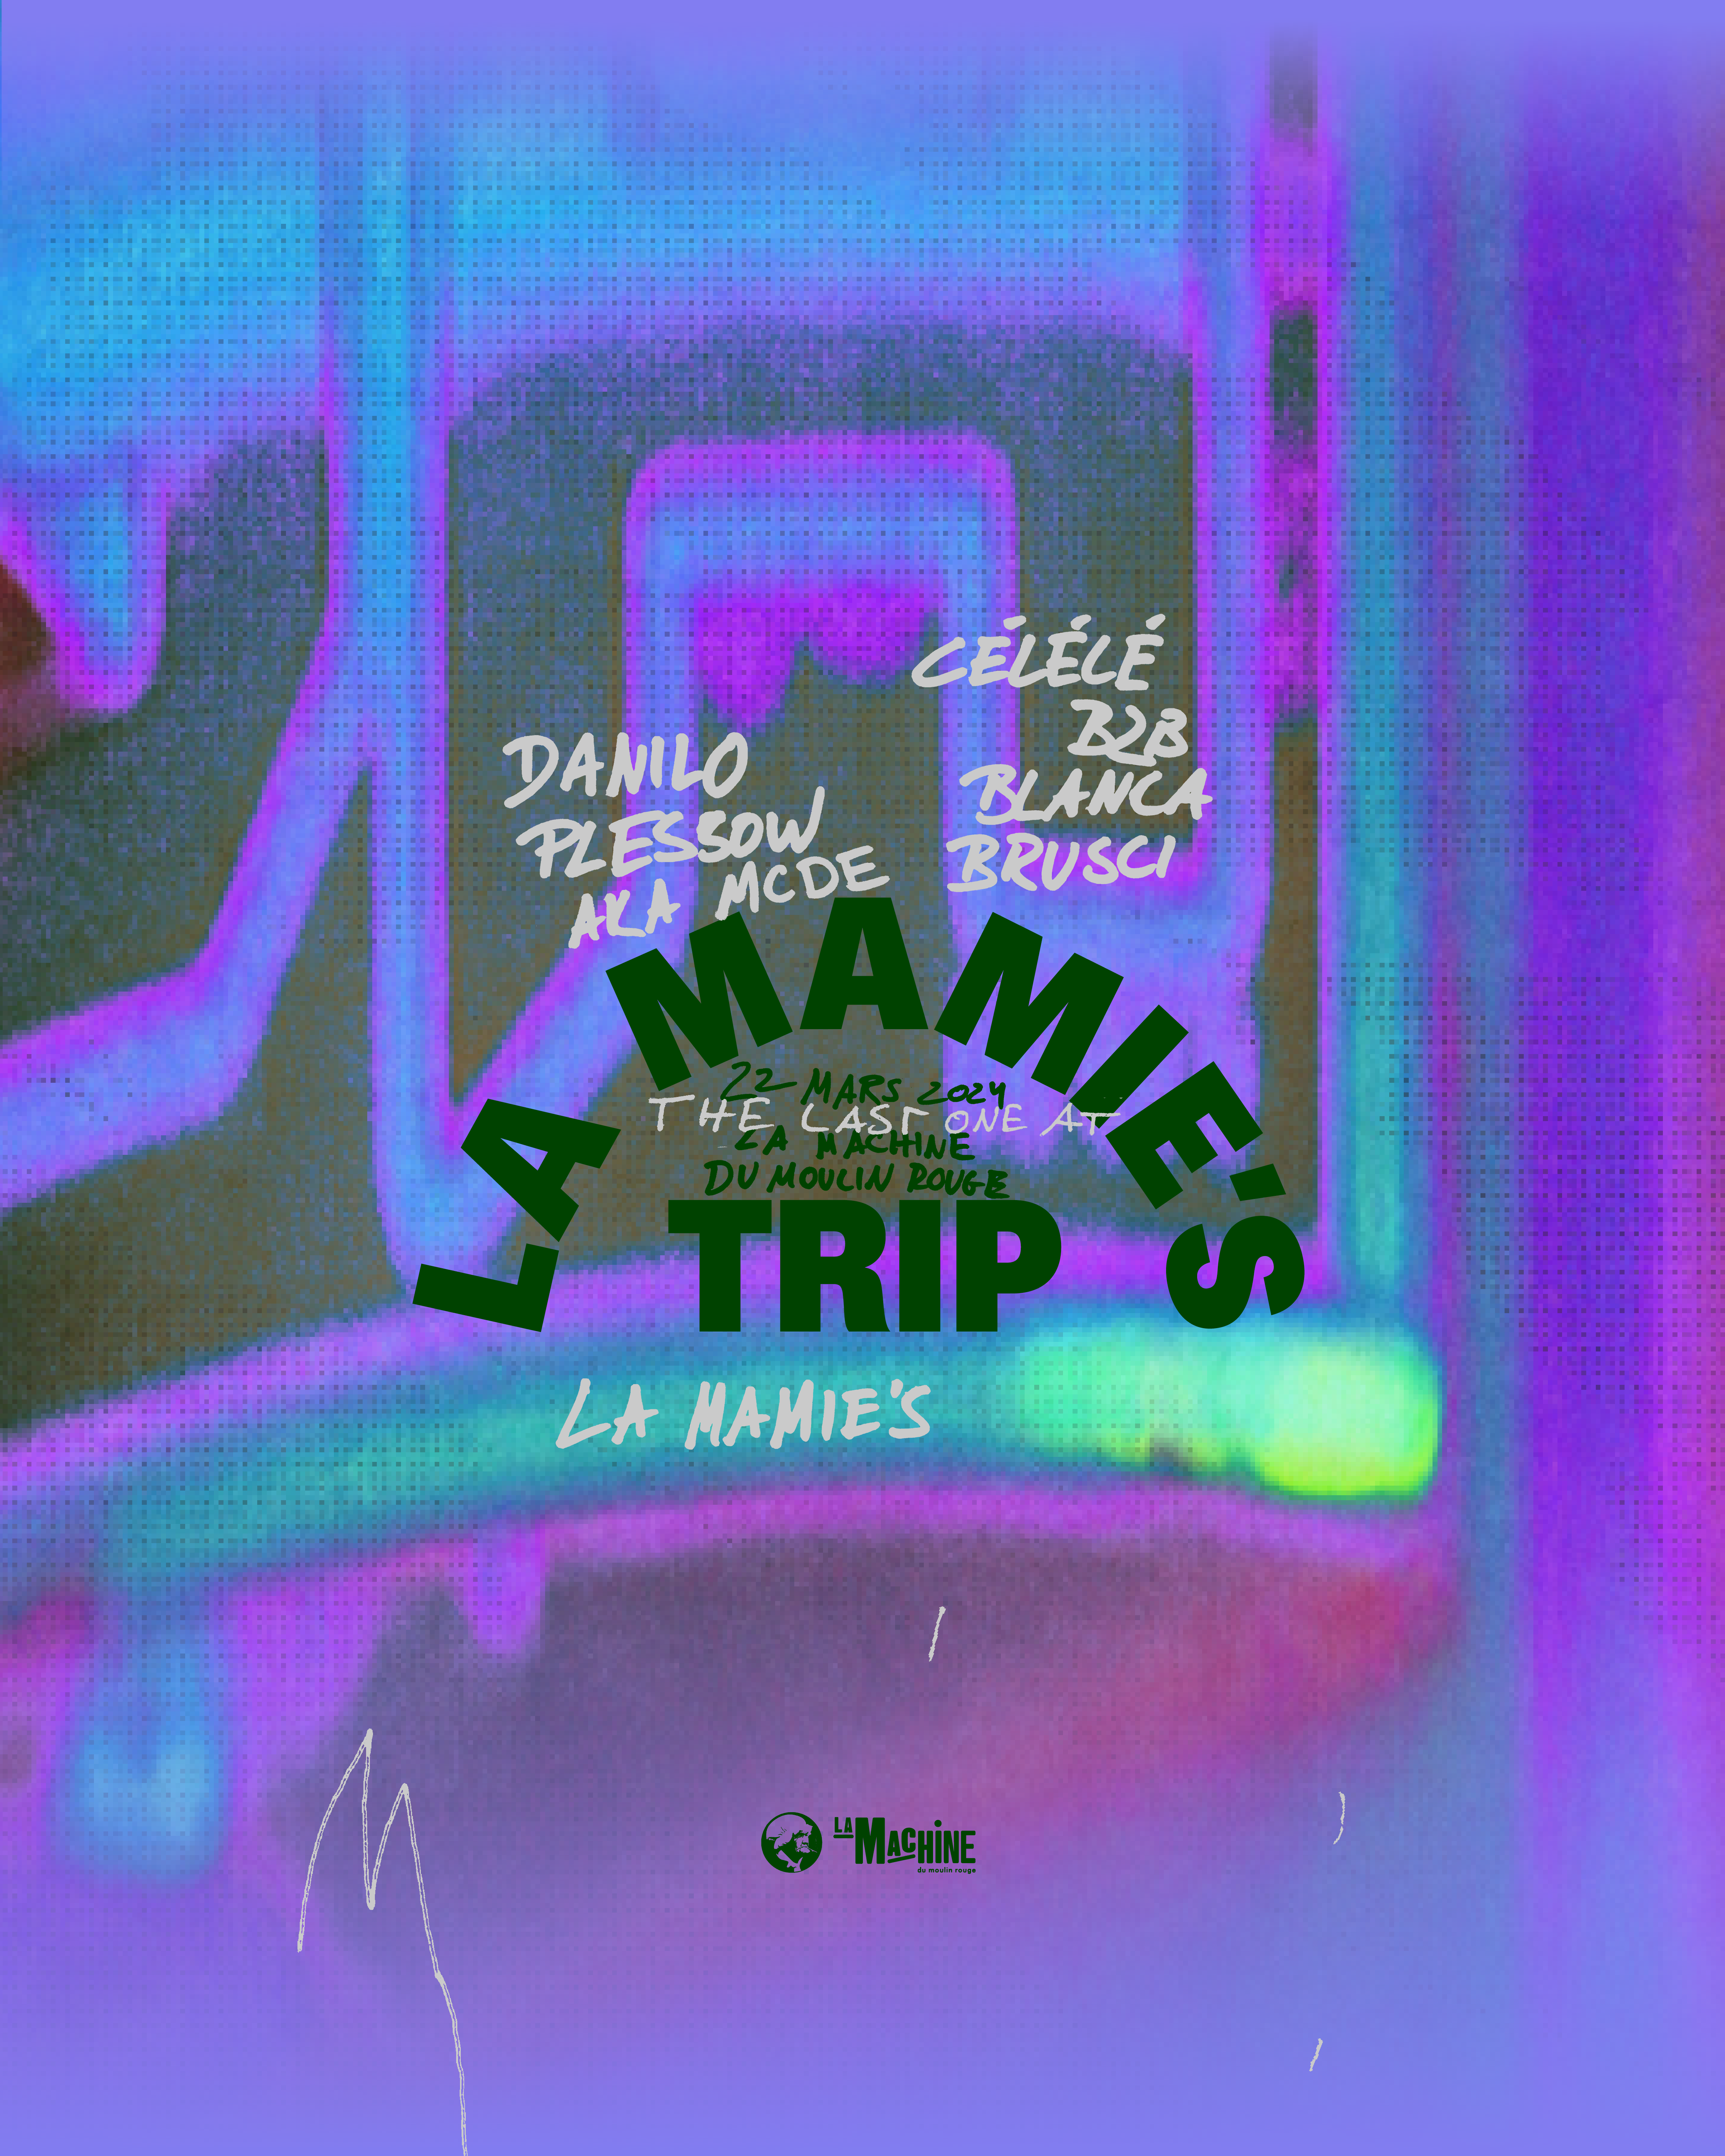 La Mamie's Trip: Danilow Plessow aka MCDE, Célélé b2b Blanca Brusci, La Mamie's - Página frontal